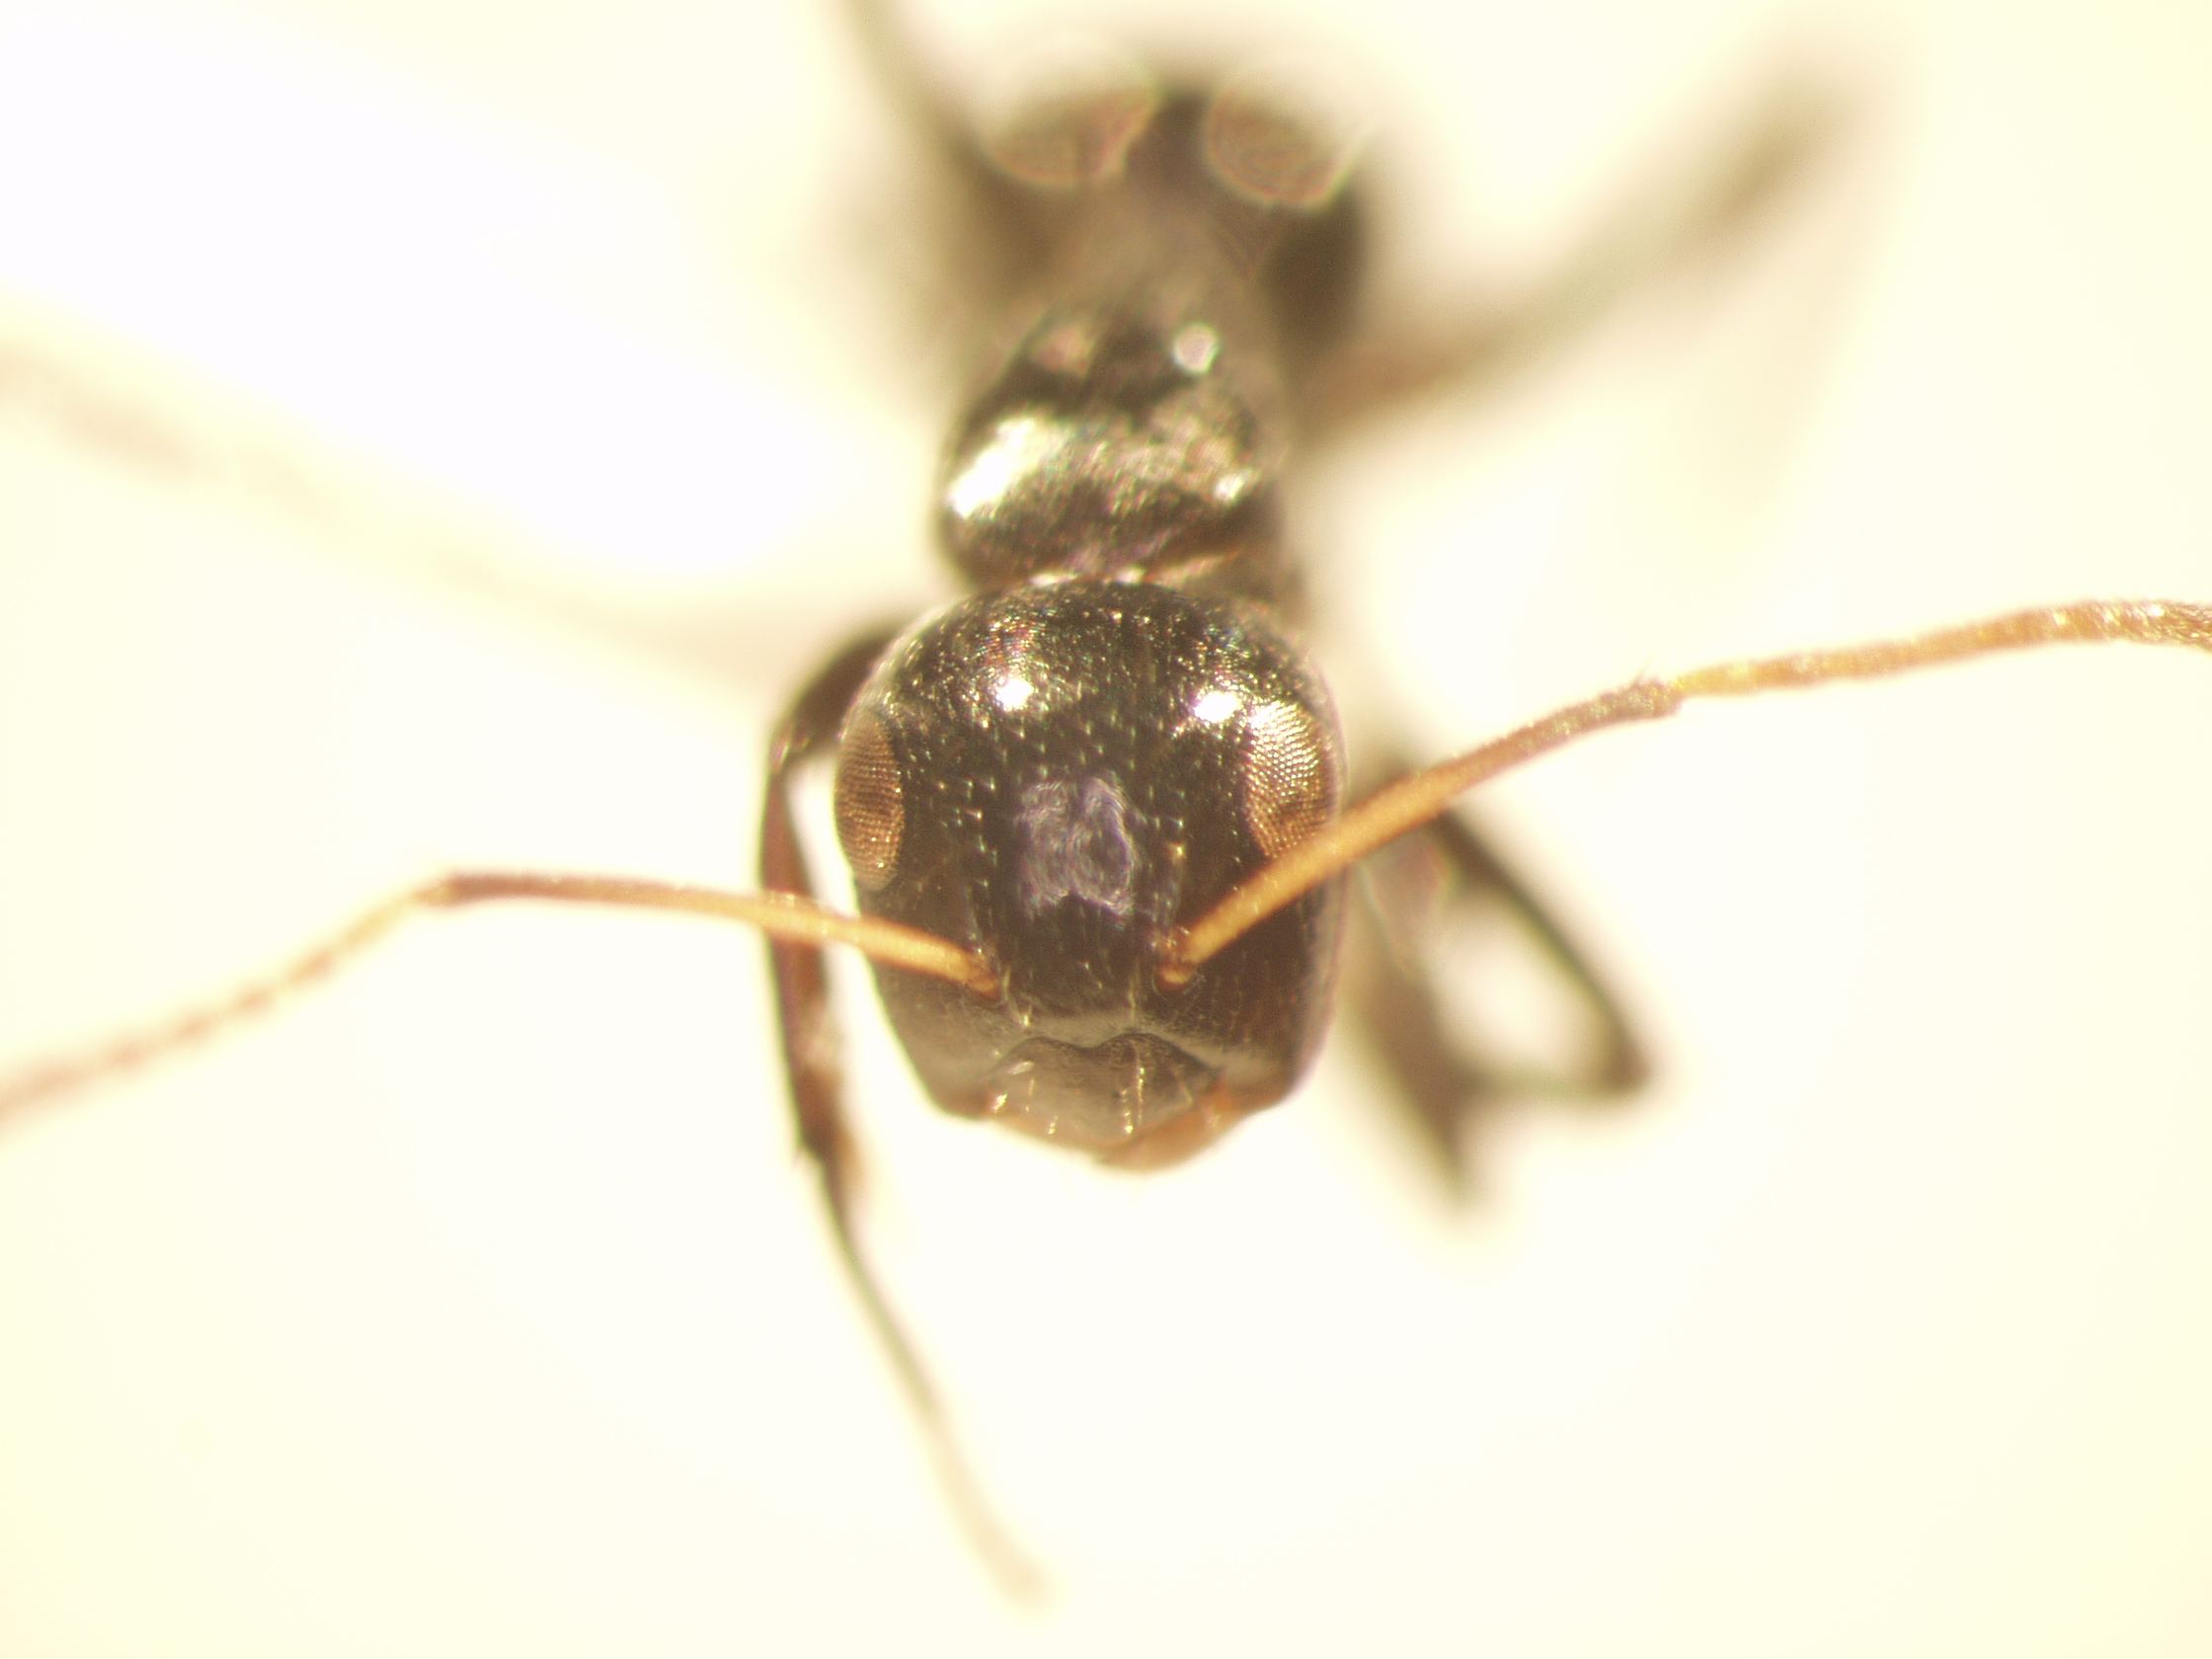 Camponotus 59 frontal